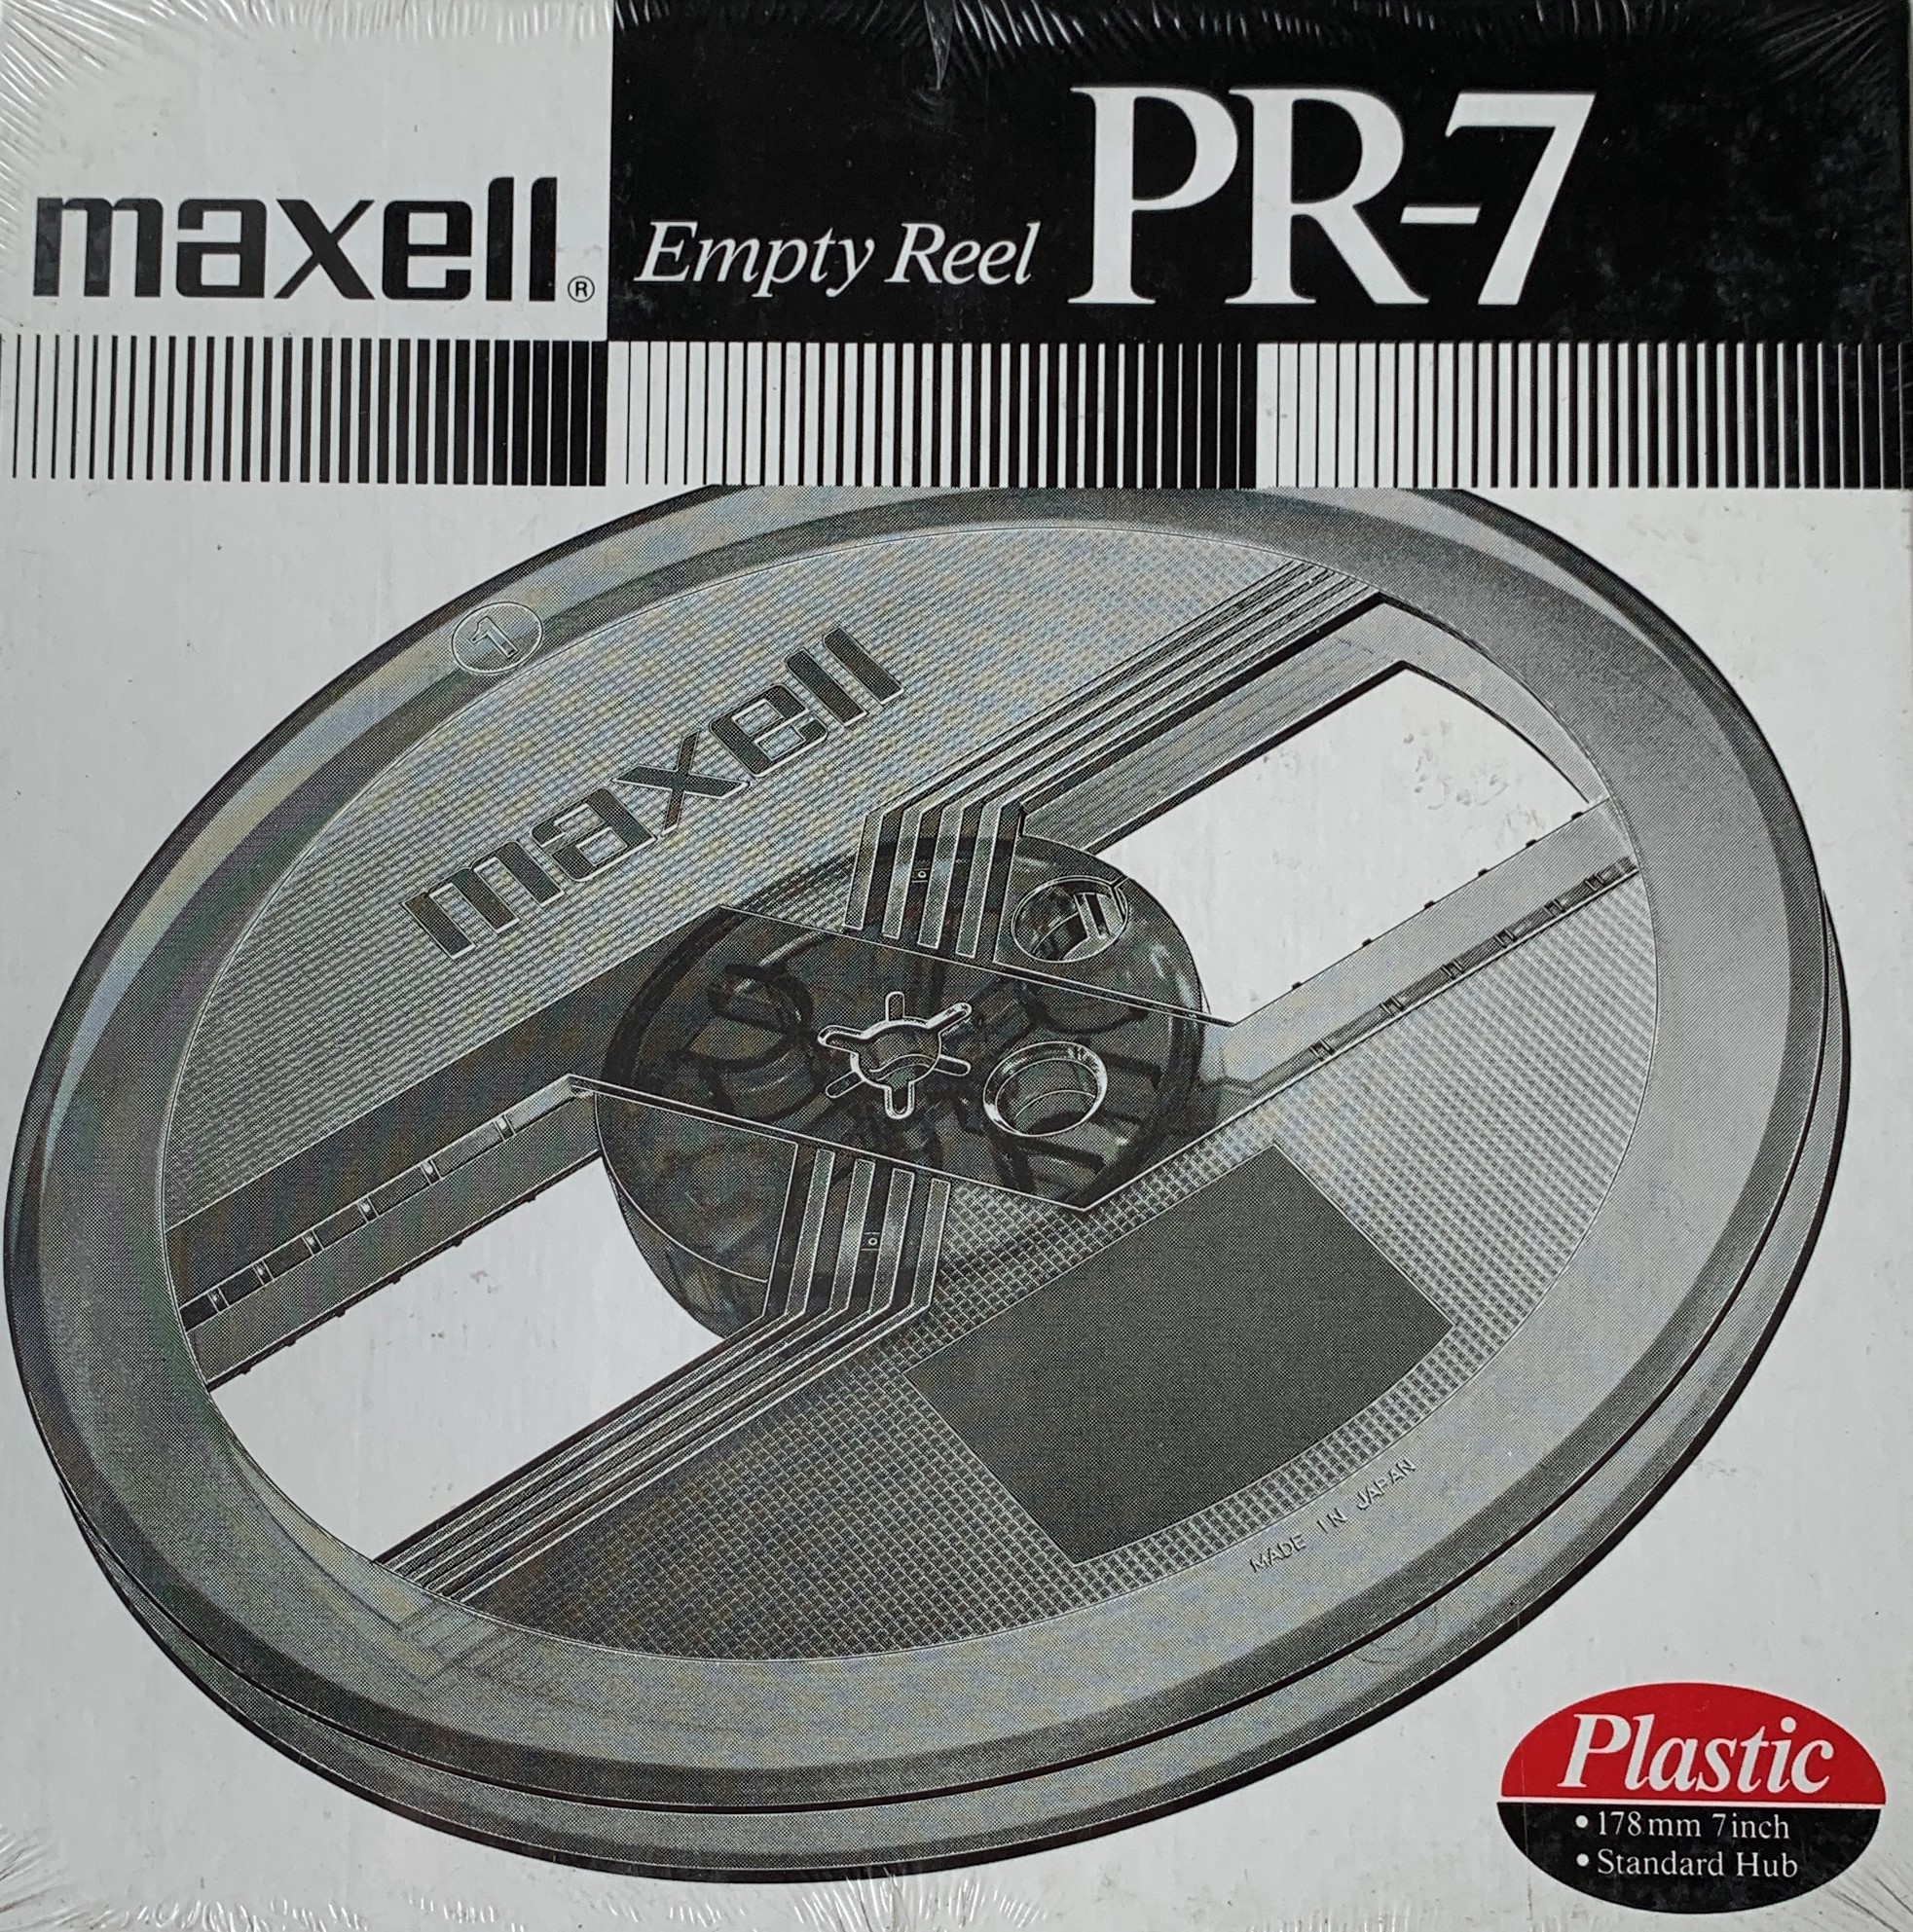 Maxell PR-7 7 Empty Reel, Grey Two Window, Used